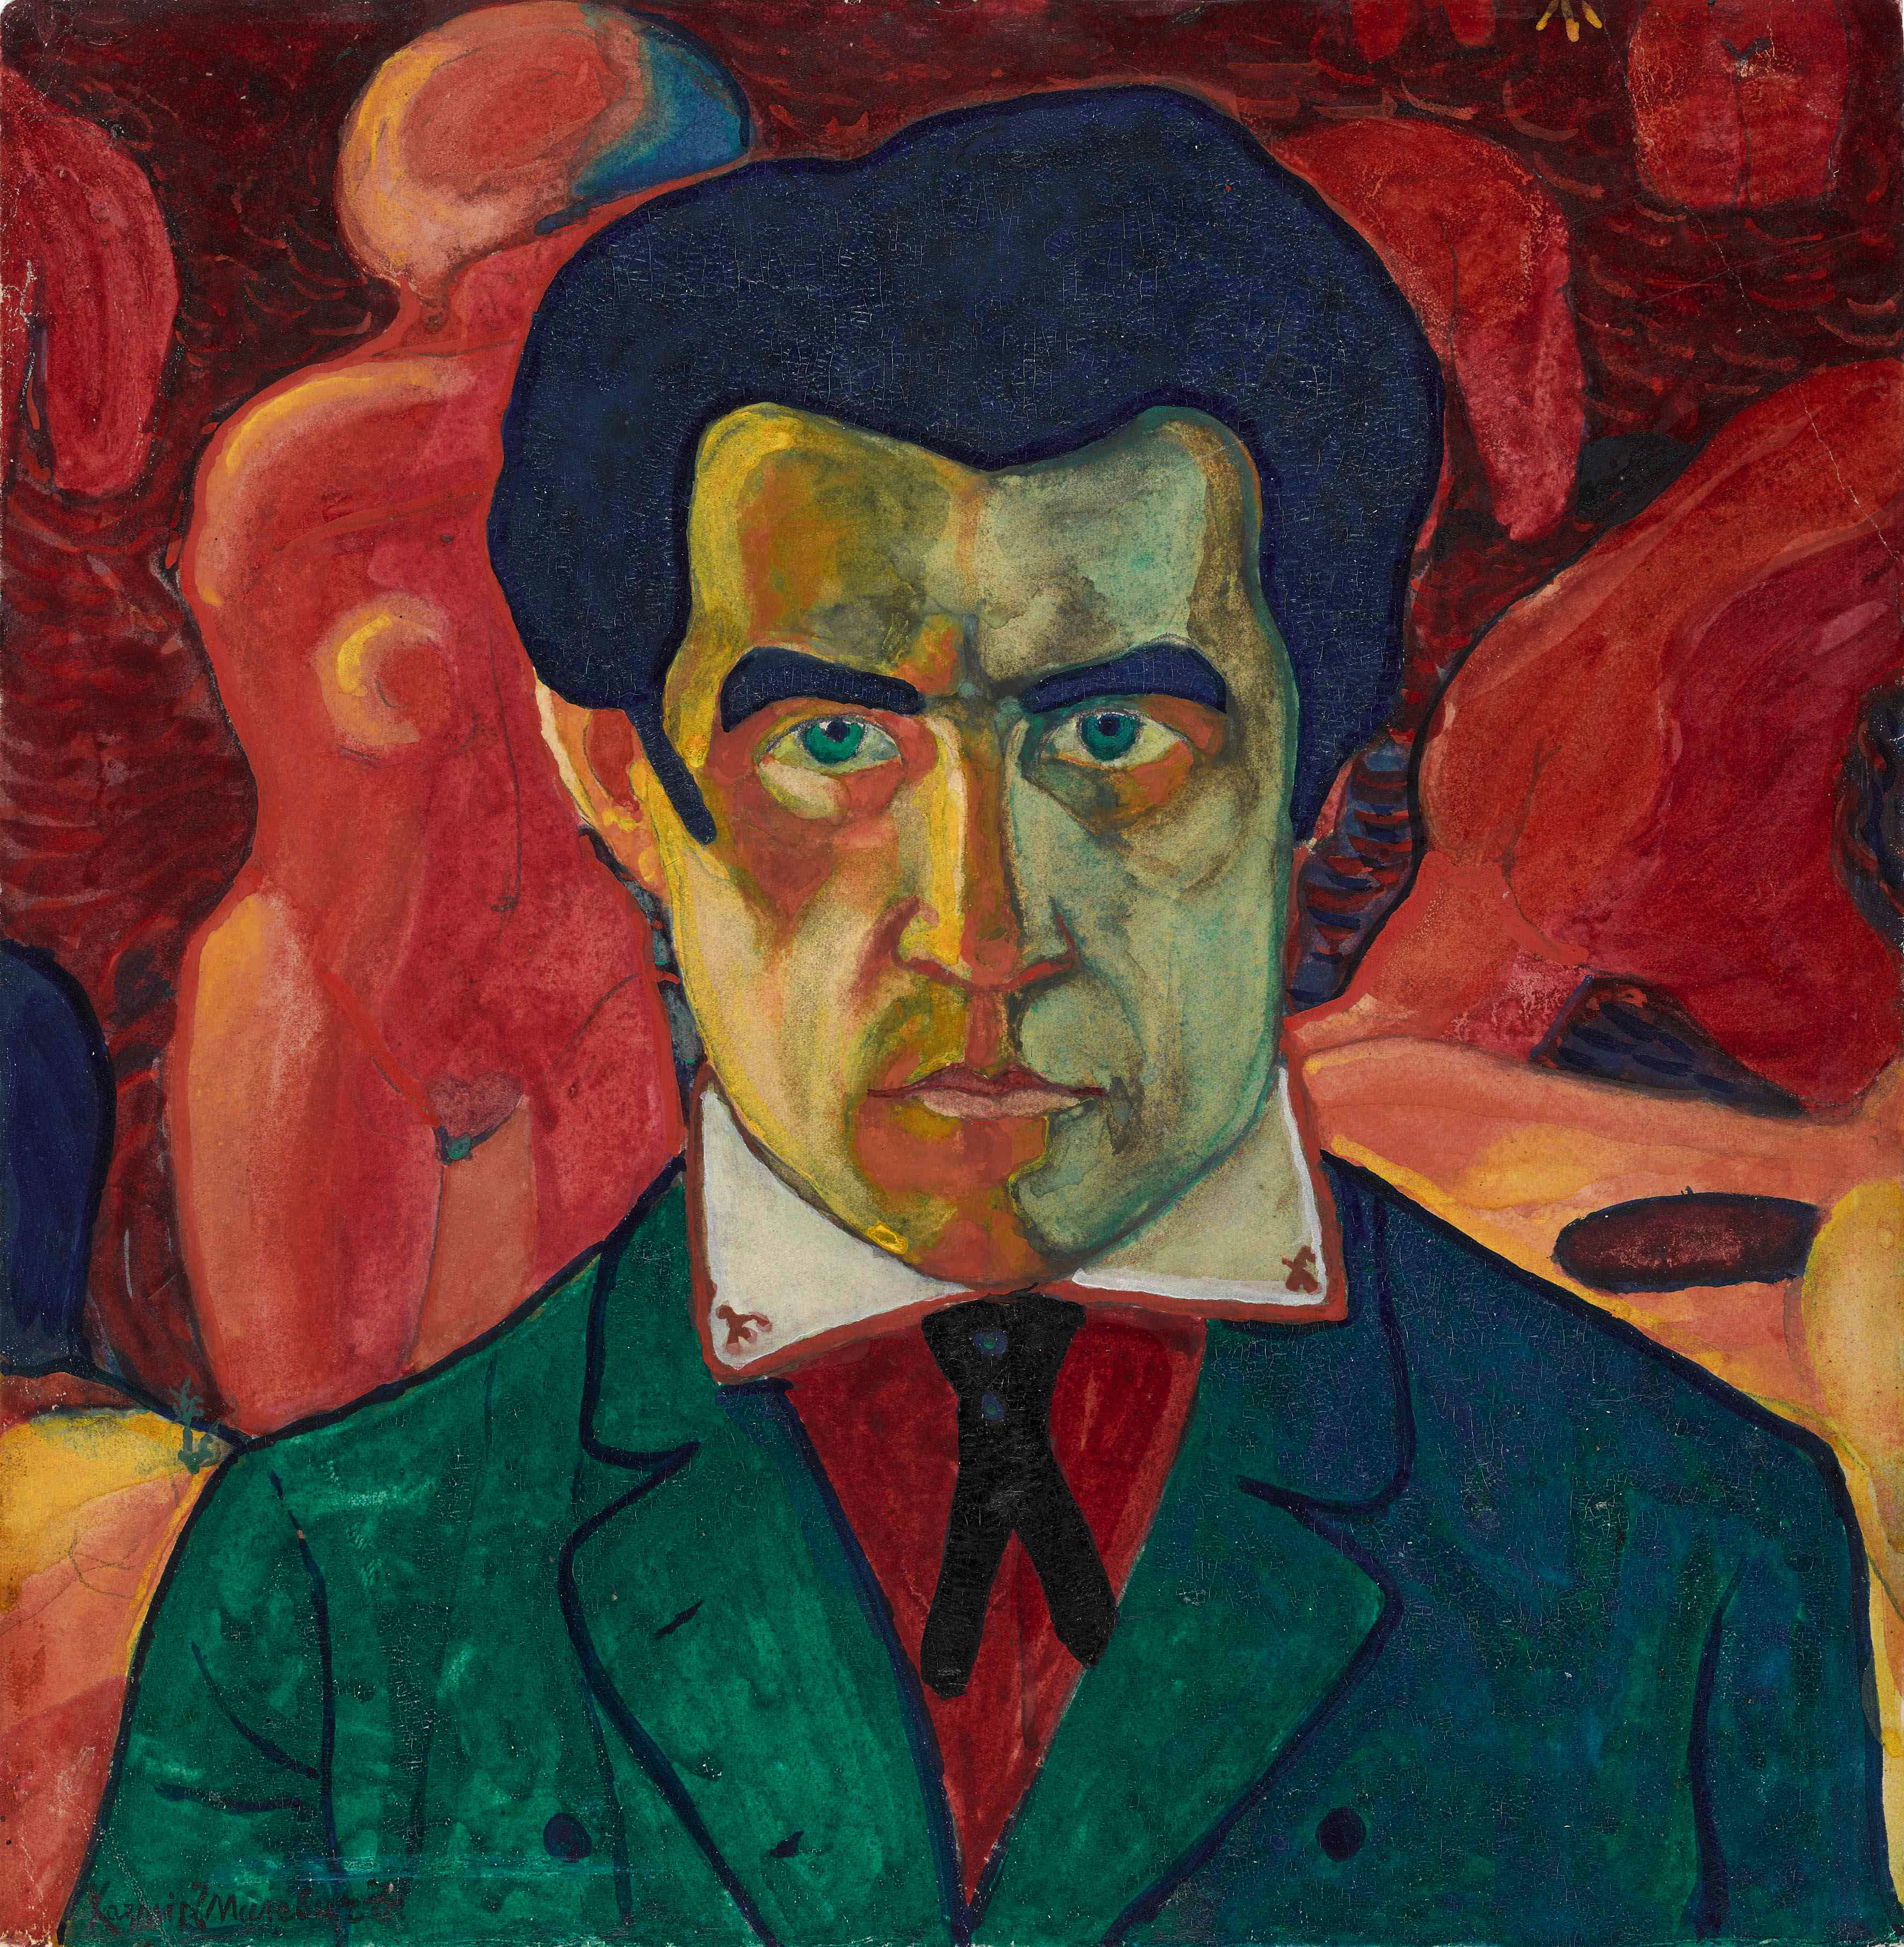 Kazimir Malevich, Self-portrait, 1910, Tretyakov Gallery, Moscow, Russia. Wikimedia Commons (public domain).